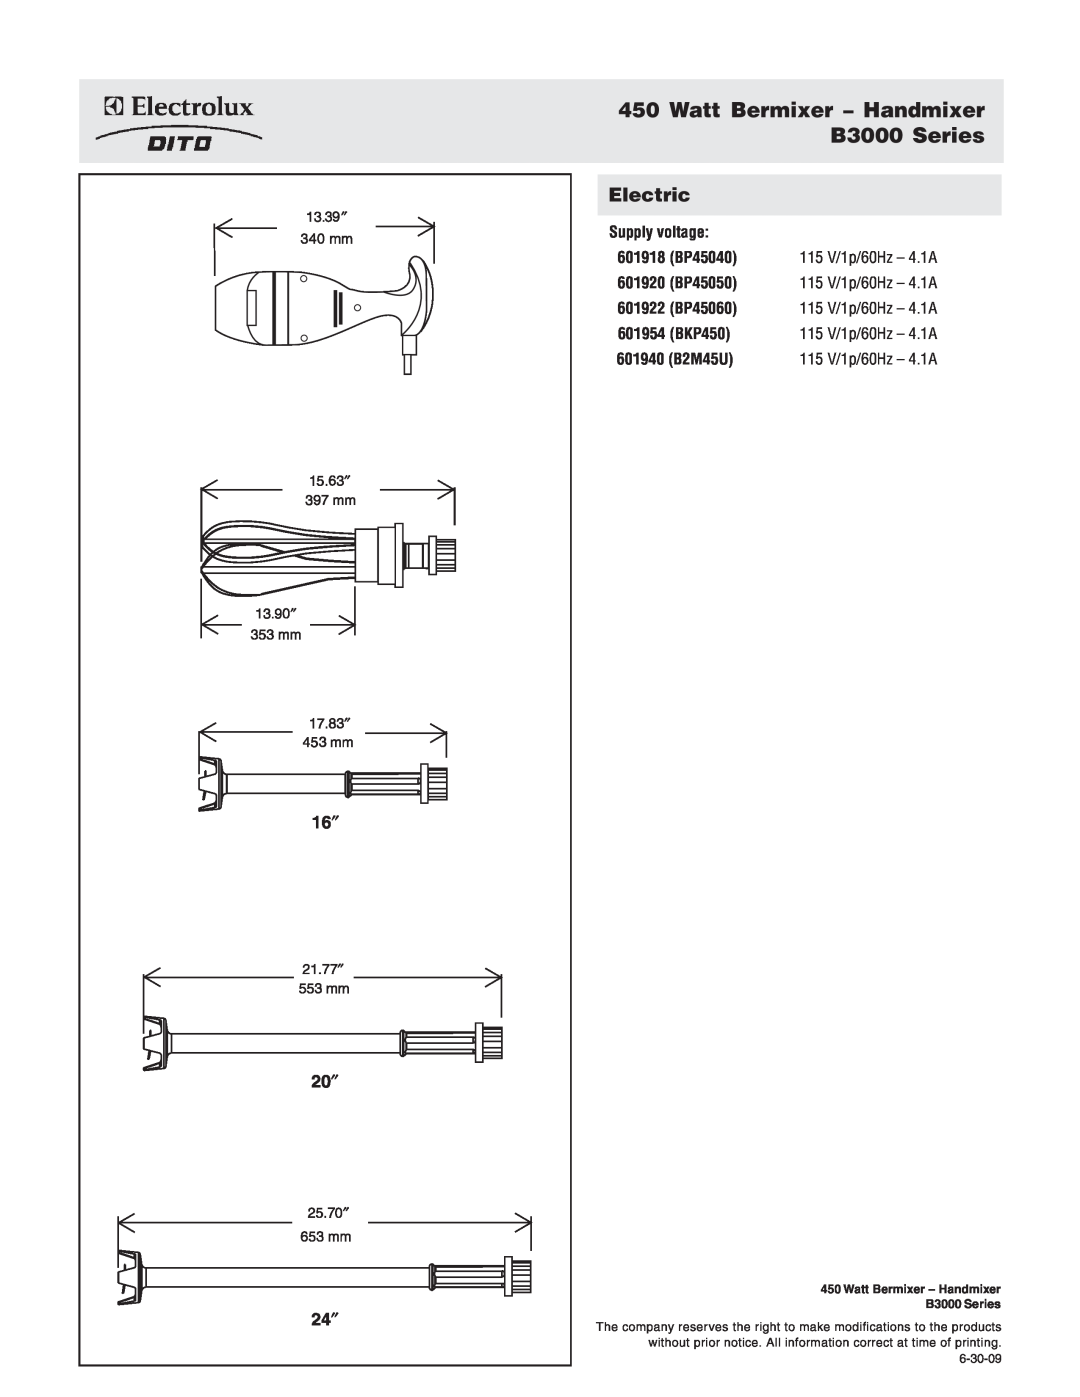 Electrolux Watt Bermixer - Handmixer B3000 Series, Supply voltage, 601918 BP45040, 601920 BP45050, 601922 BP45060 